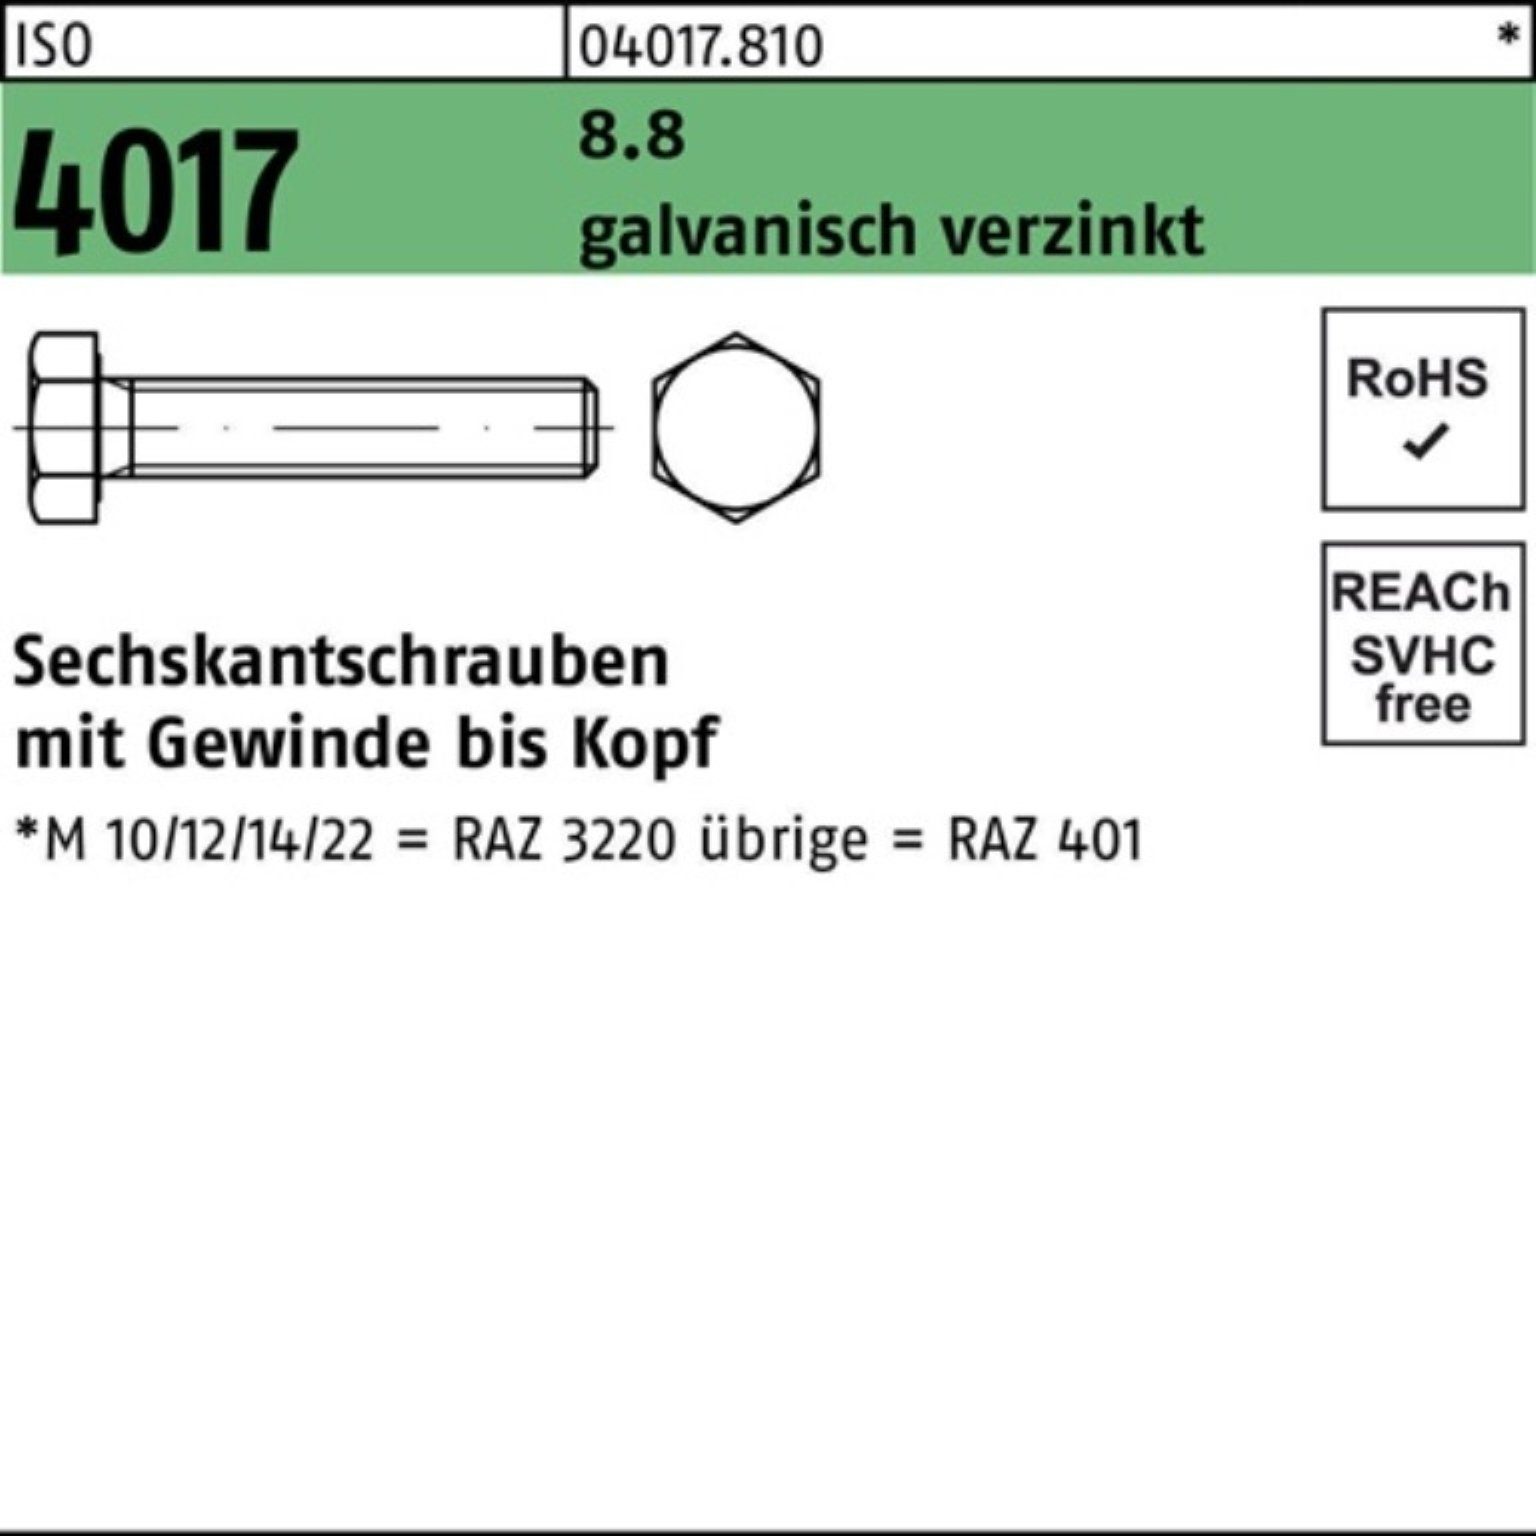 Pack Sechskantschraube 4017 Stü 75 VG Bufab 8.8 Sechskantschraube M36x 1 ISO galv.verz. 100er